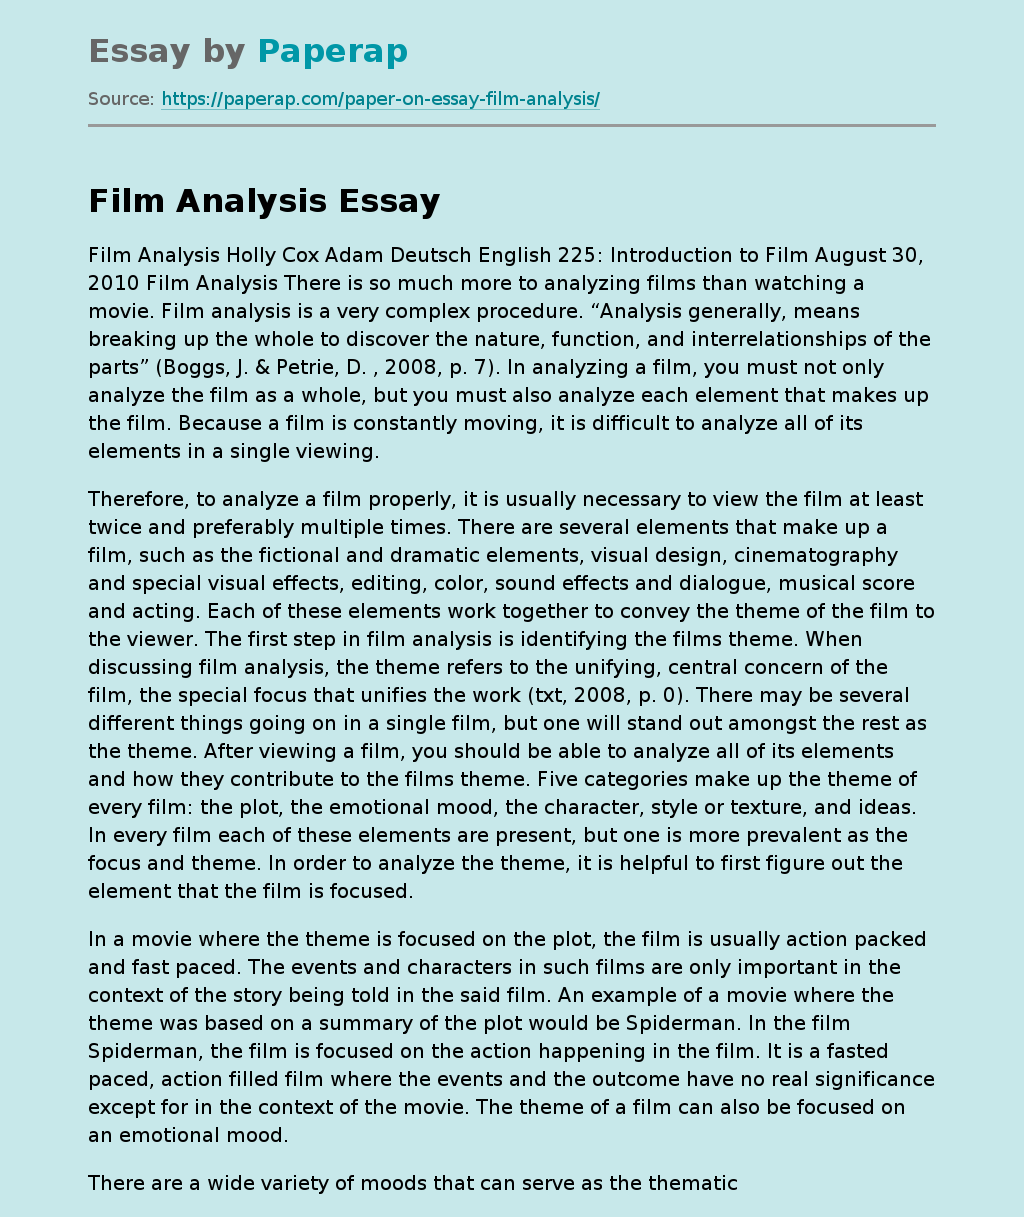 Film Analysis 101